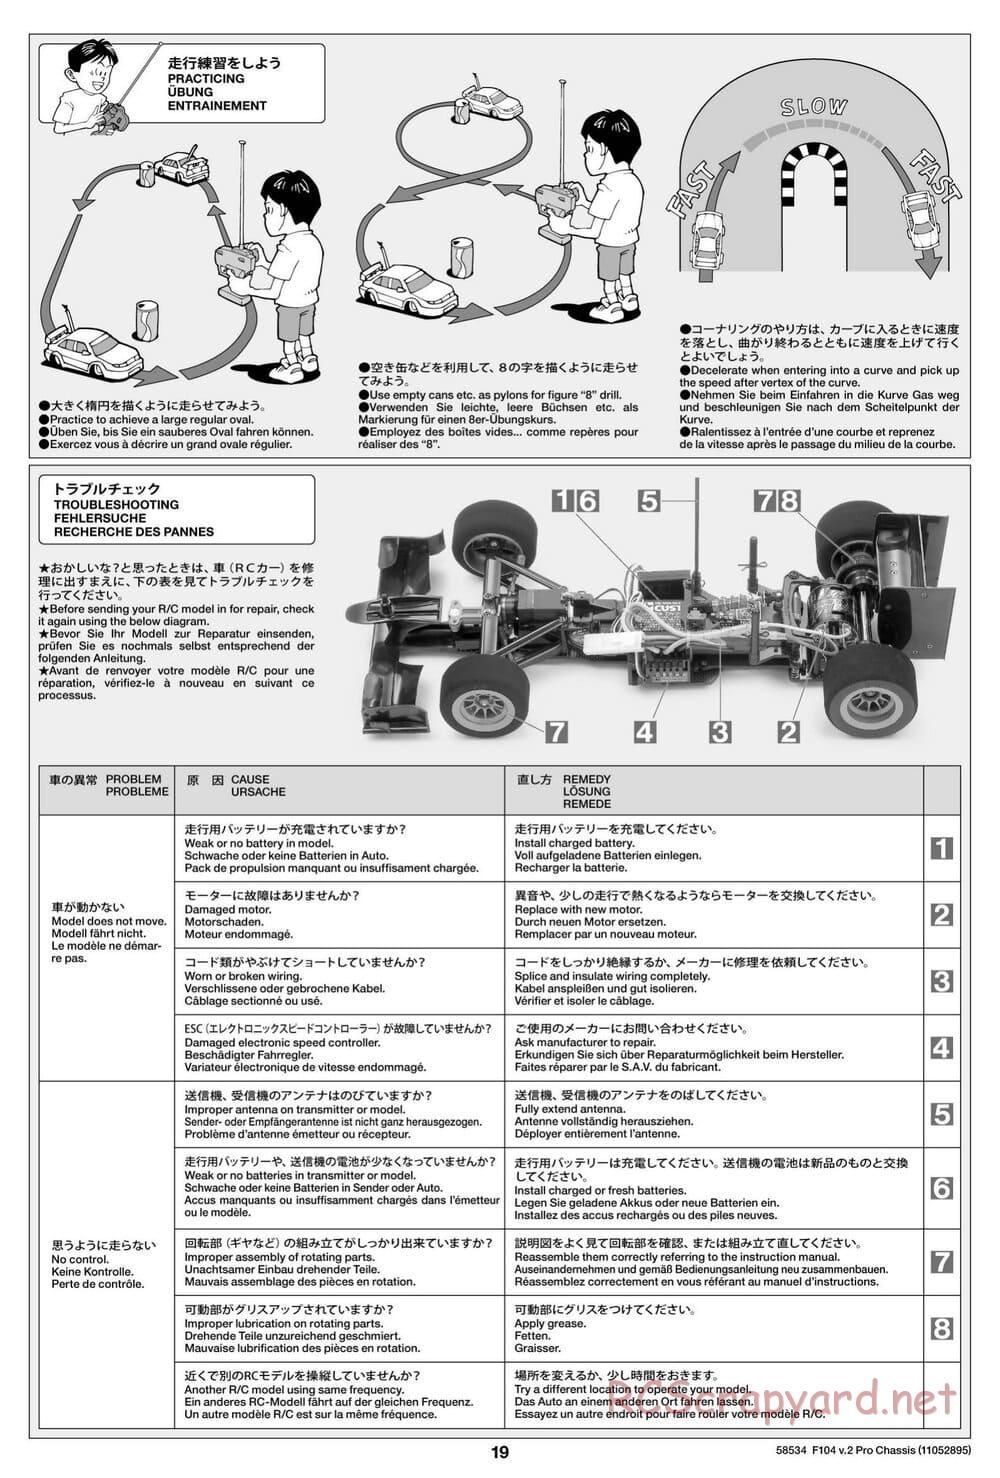 Tamiya - F104 Ver.II PRO Chassis - Manual - Page 19